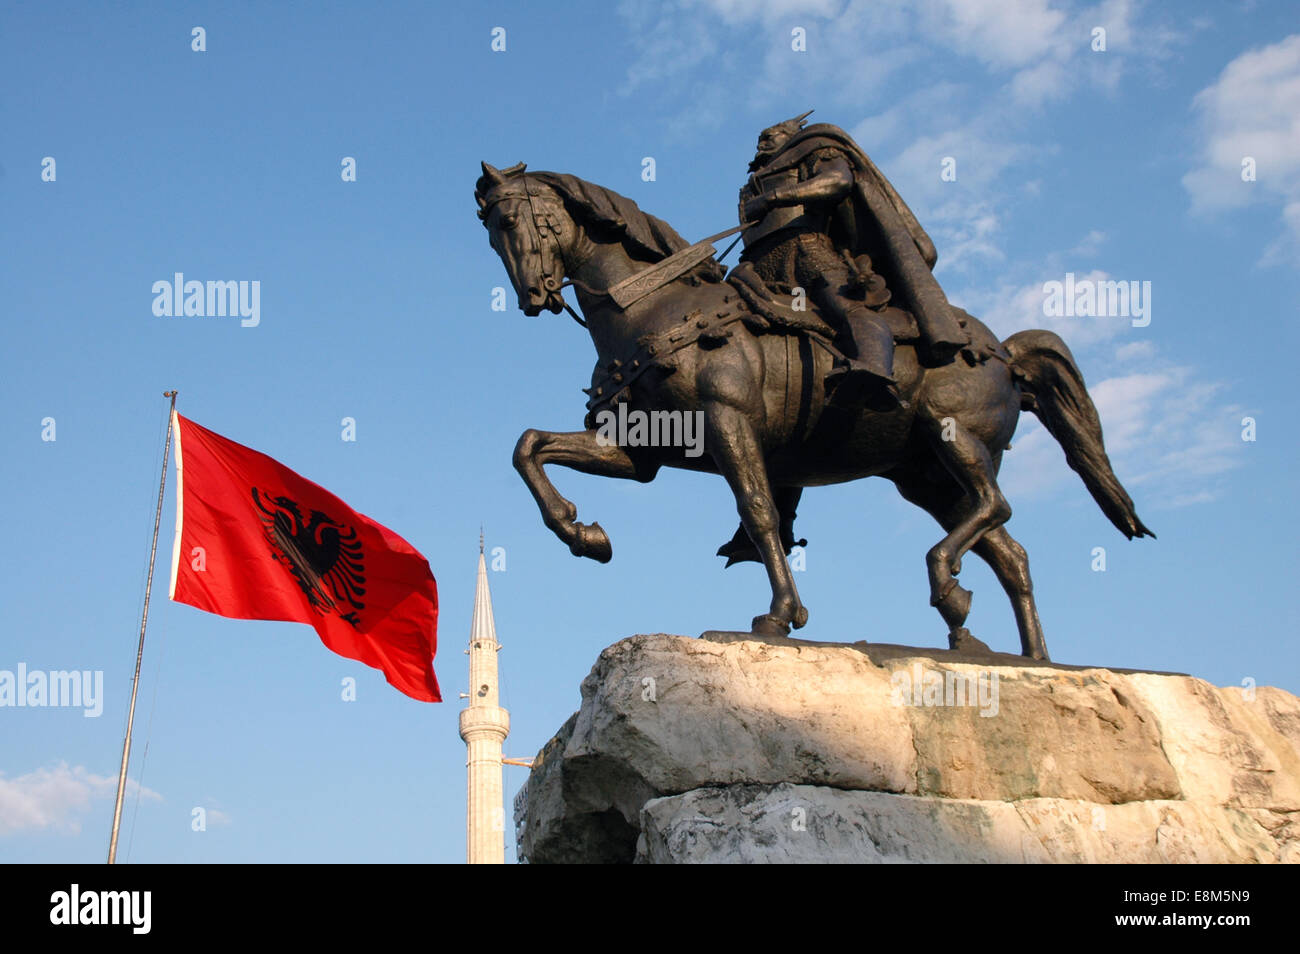 Tirana main square with the statue of Skanderberg, Albania Stock Photo